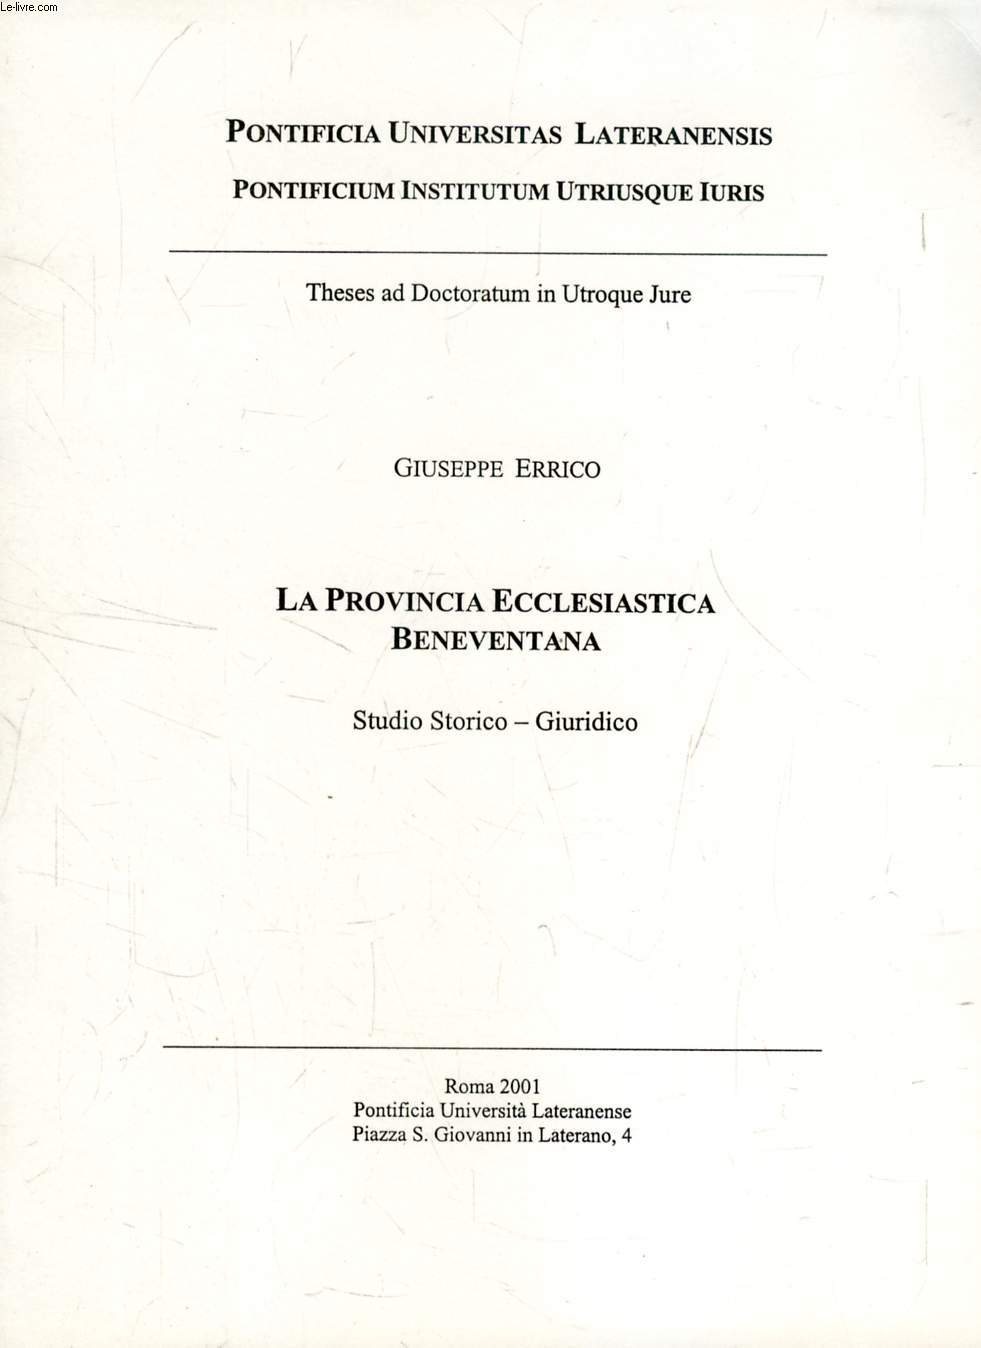 LA PROVINCIA ECCLESIASTICA BENEVENTANA, STUDIO STORICO - GIURIDICO (TESI)